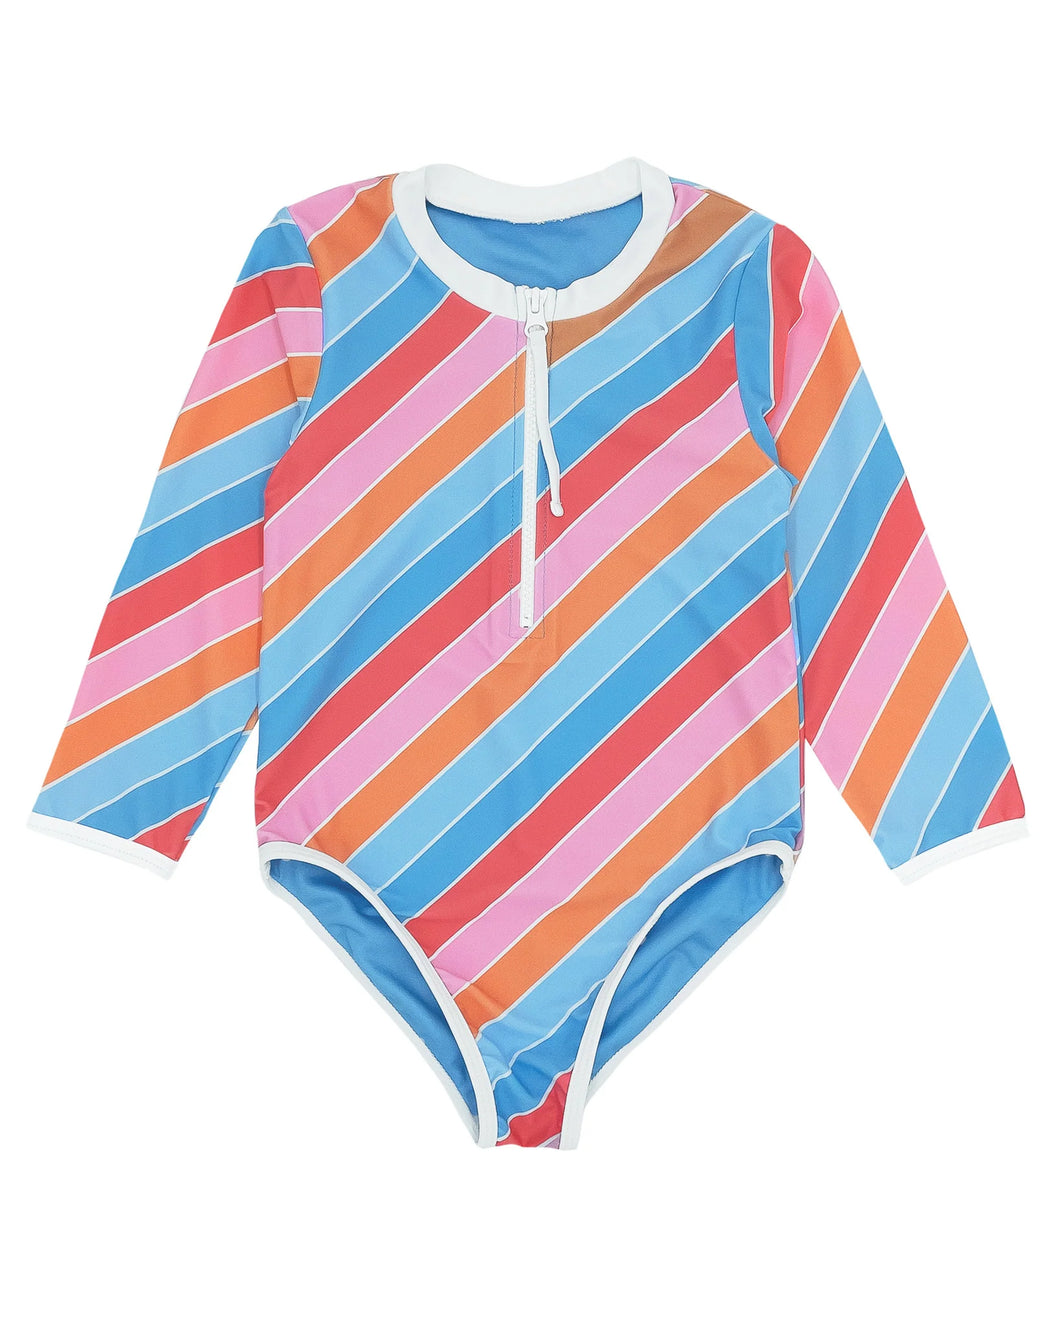 Feather 4 Arrow- Sunseeker Surf Suit (Multi Color, 2-6y)